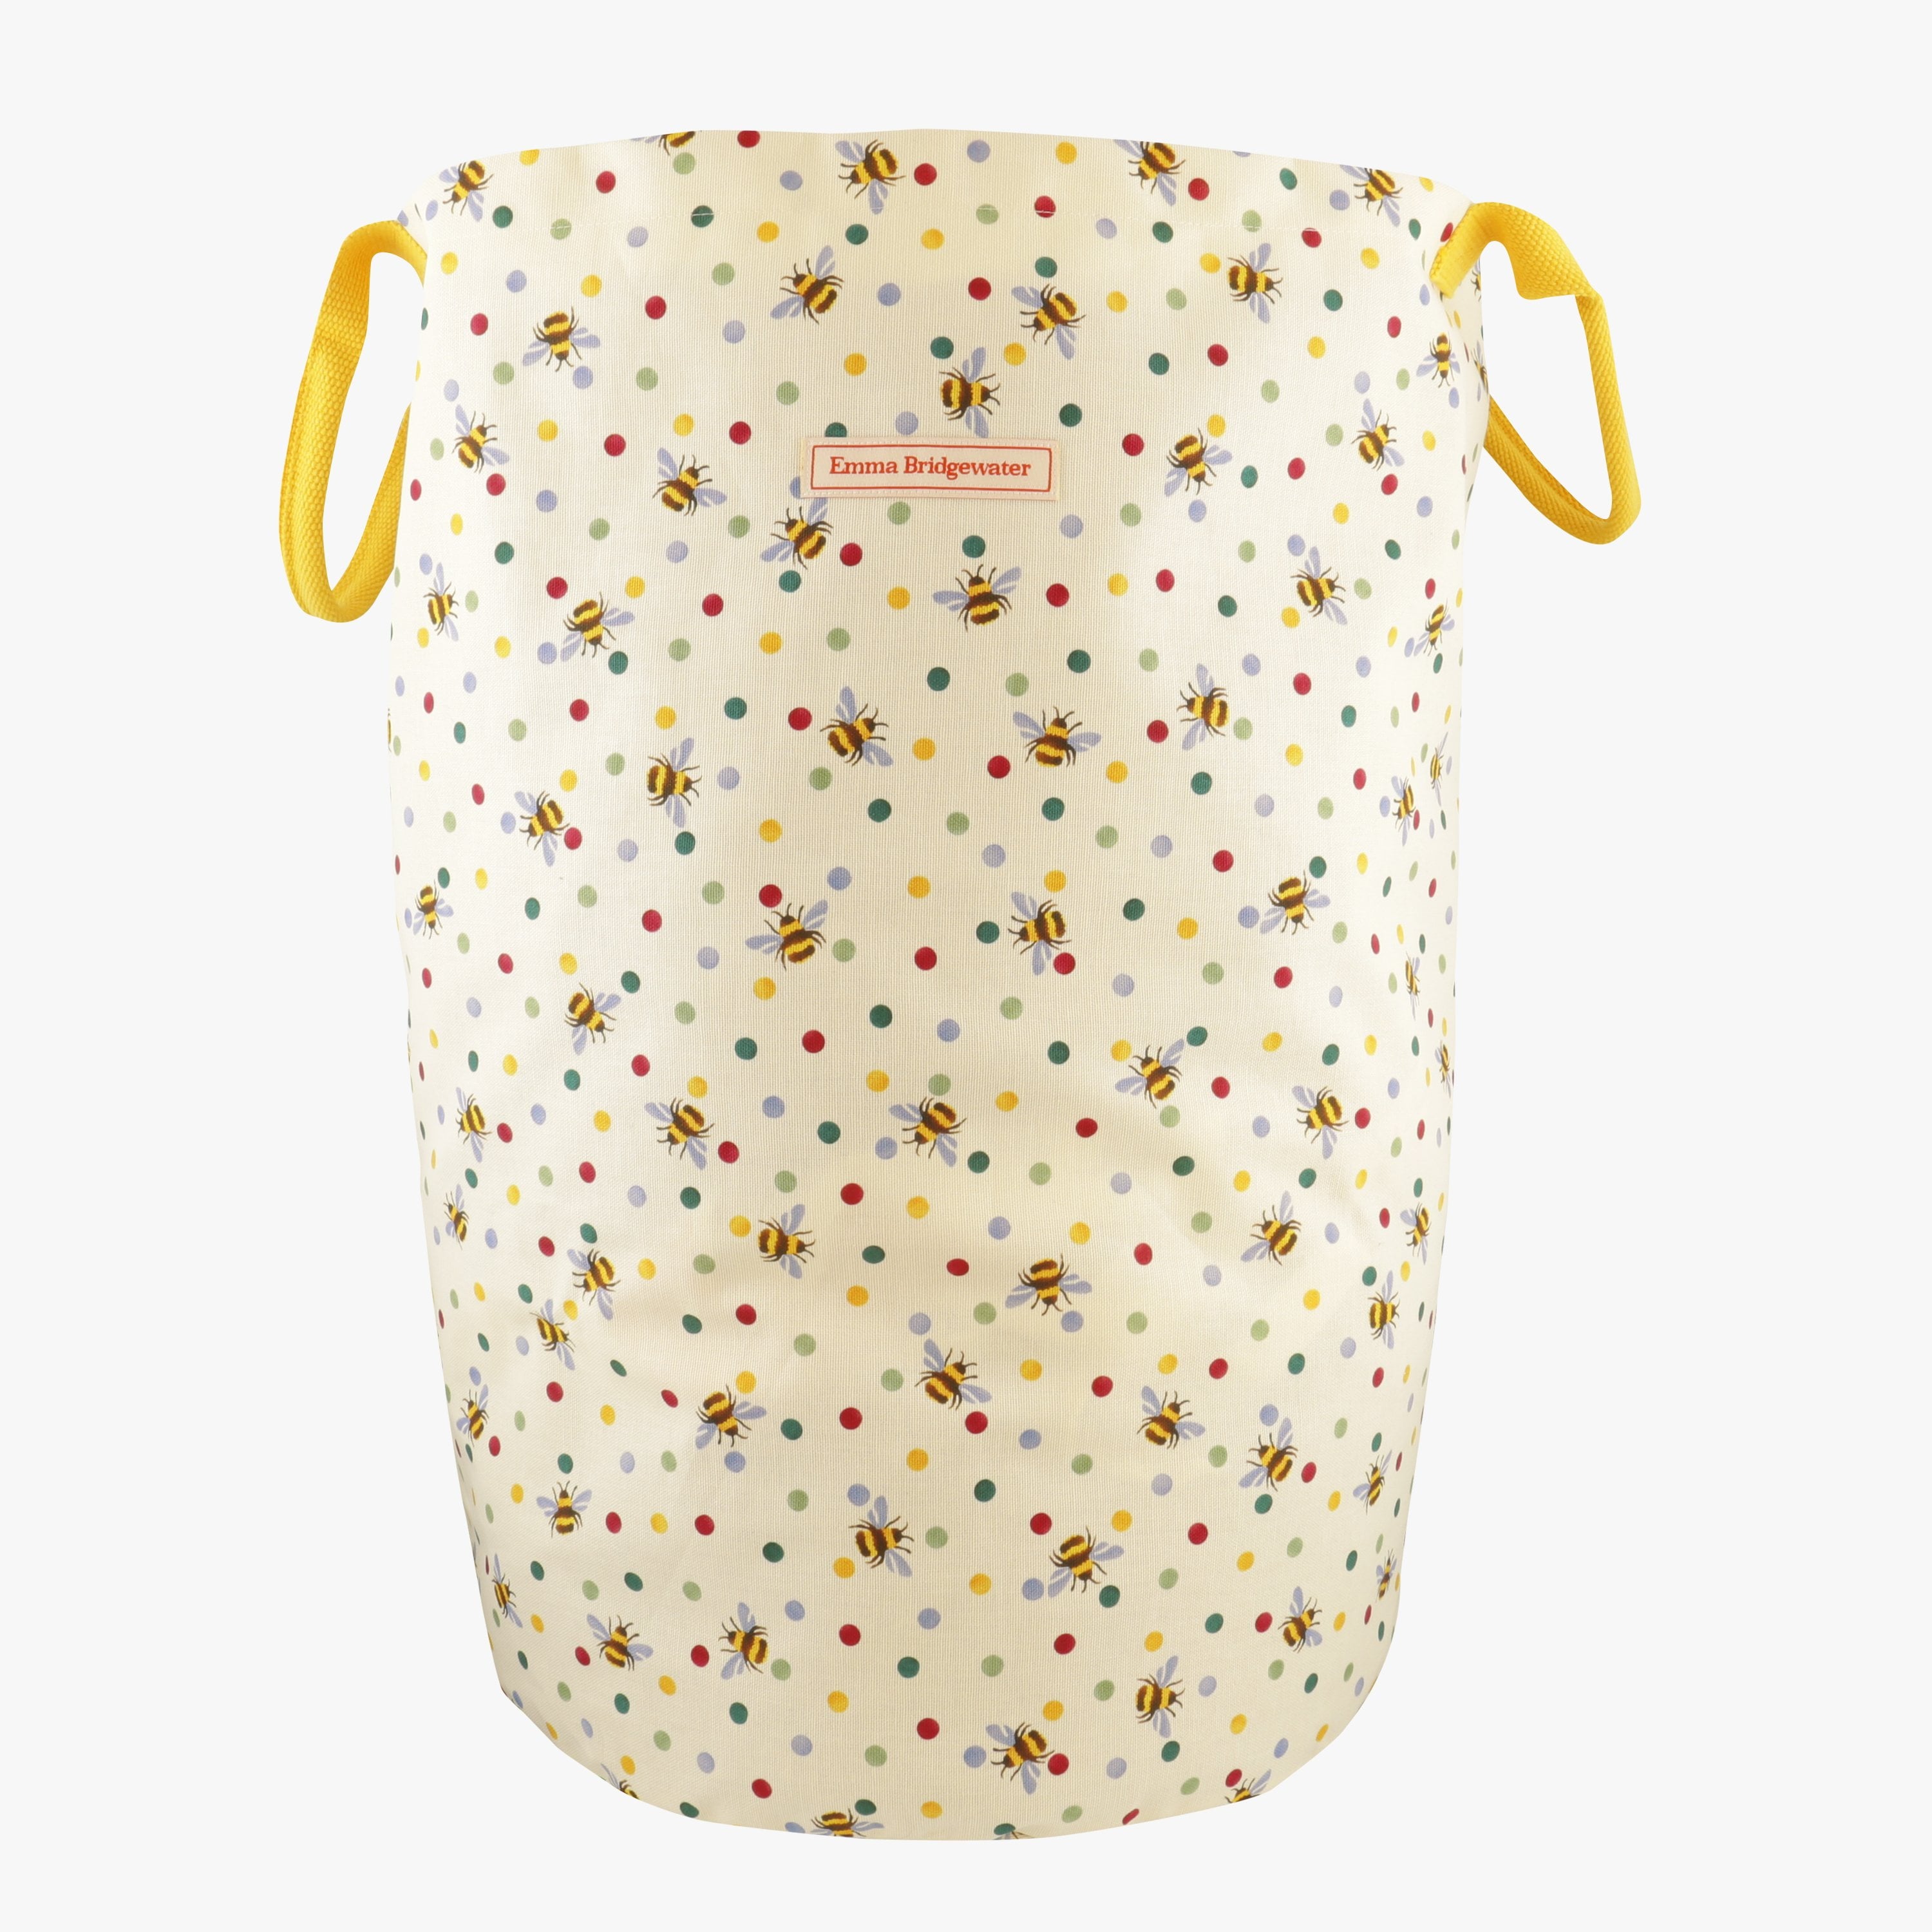 Emma Bridgewater |  Emma Bridgewater  Bumblebee & Small Polka Dot Large Drawstring Laundry Bag